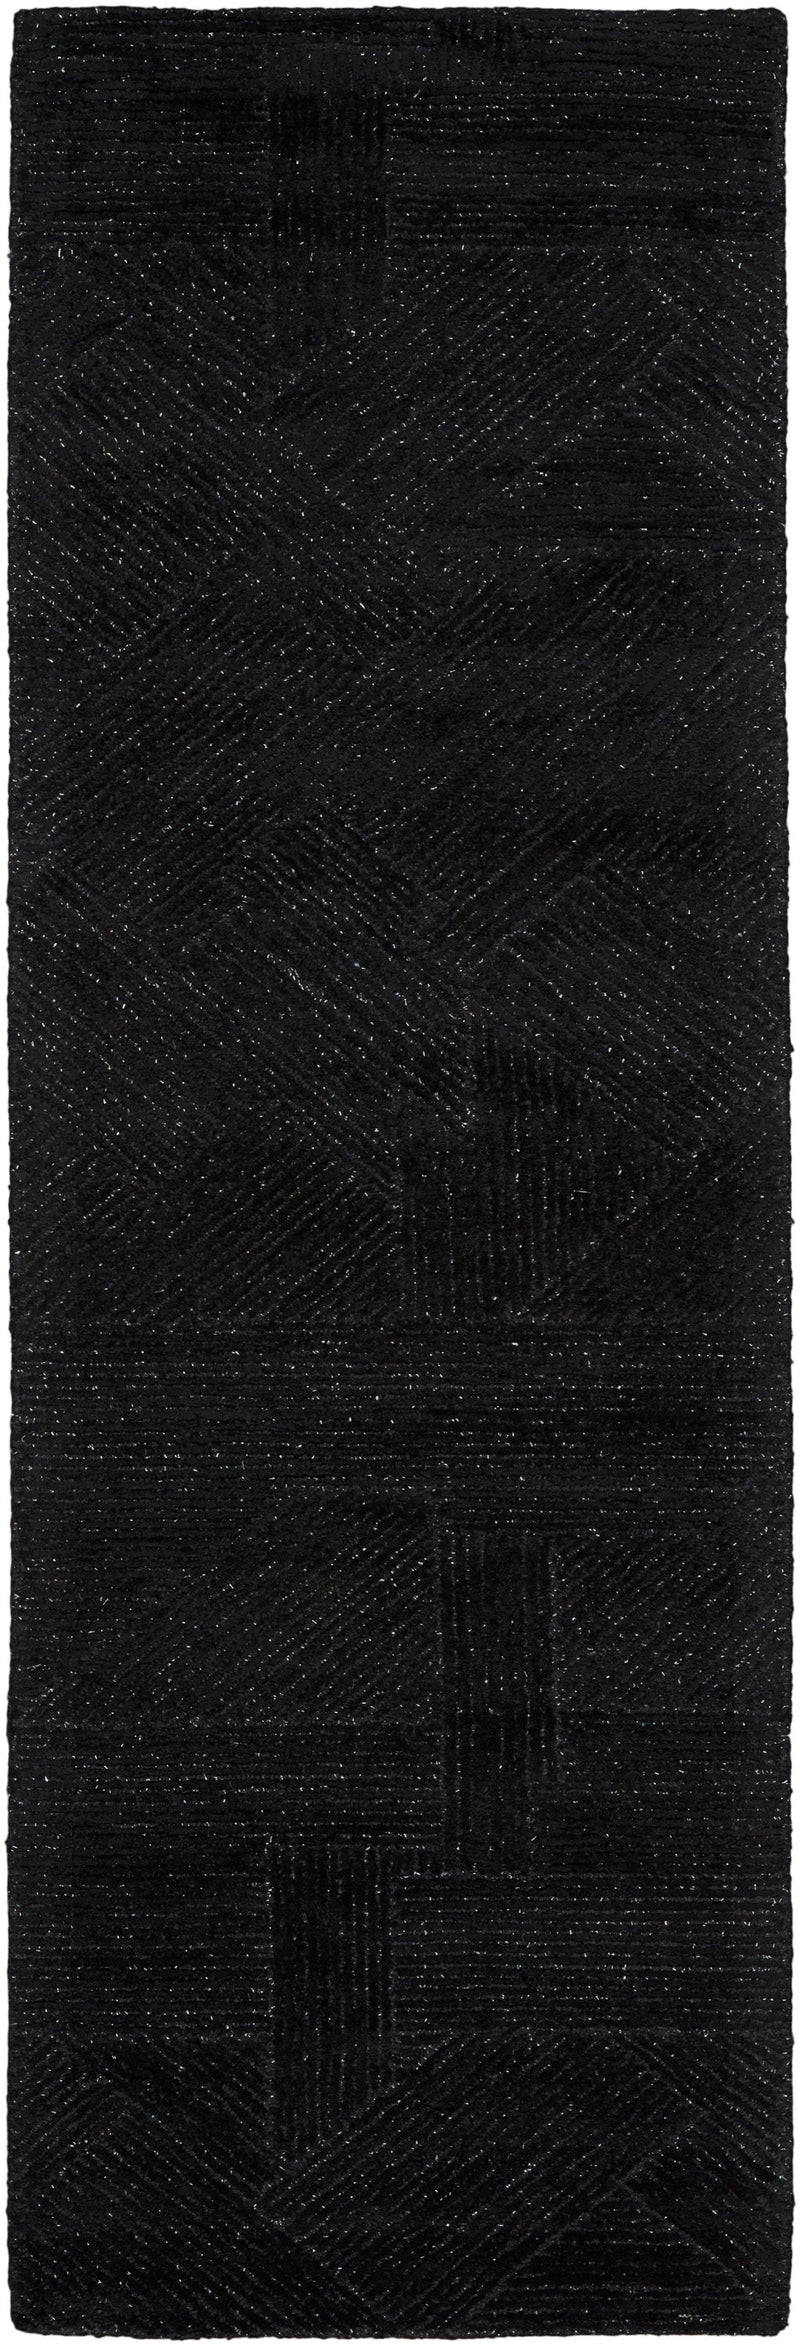 media image for ma30 star handmade black rug by nourison 99446880871 redo 2 229